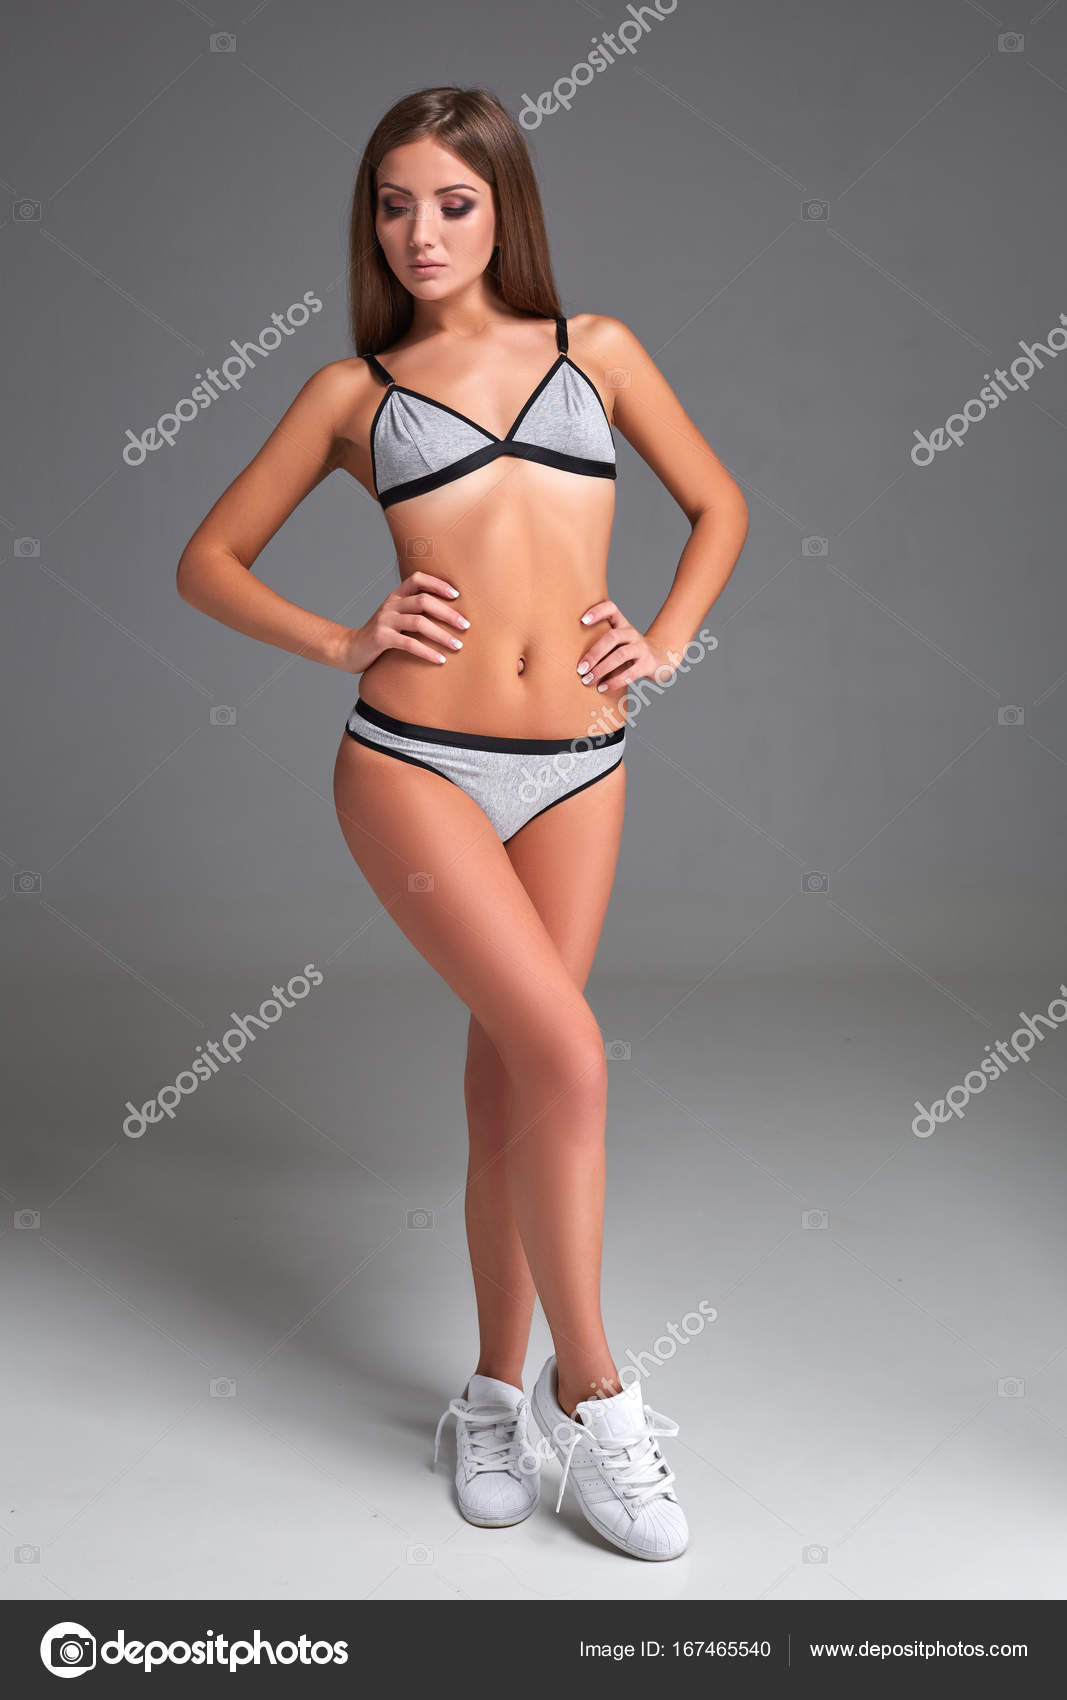 https://st3.depositphotos.com/5954192/16746/i/1600/depositphotos_167465540-stock-photo-beautiful-girl-in-sports-underwear.jpg